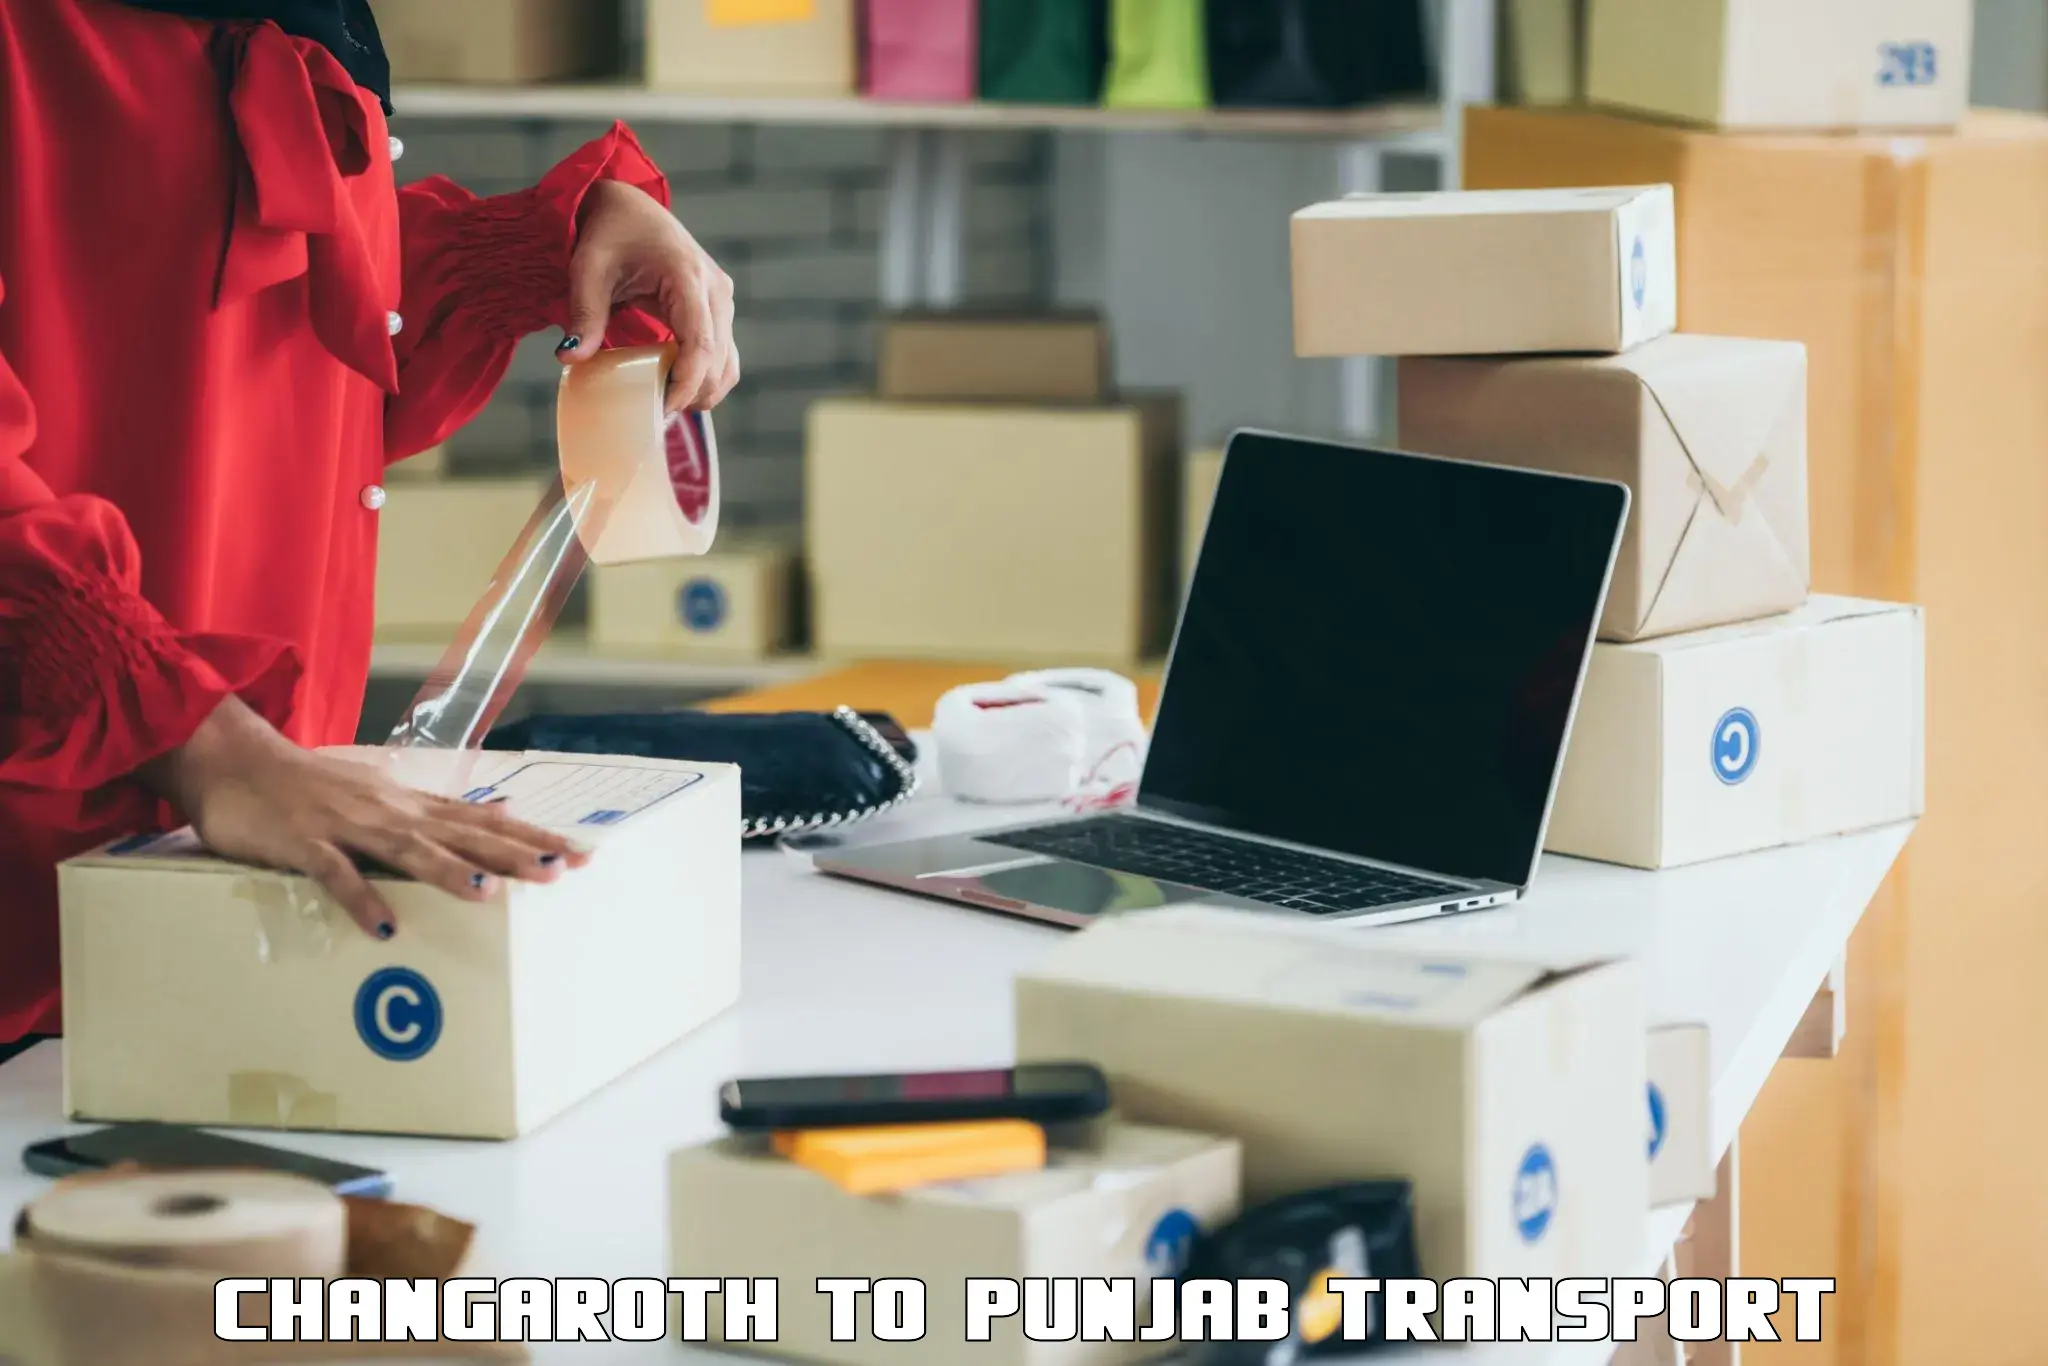 Cargo transportation services in Changaroth to Punjab